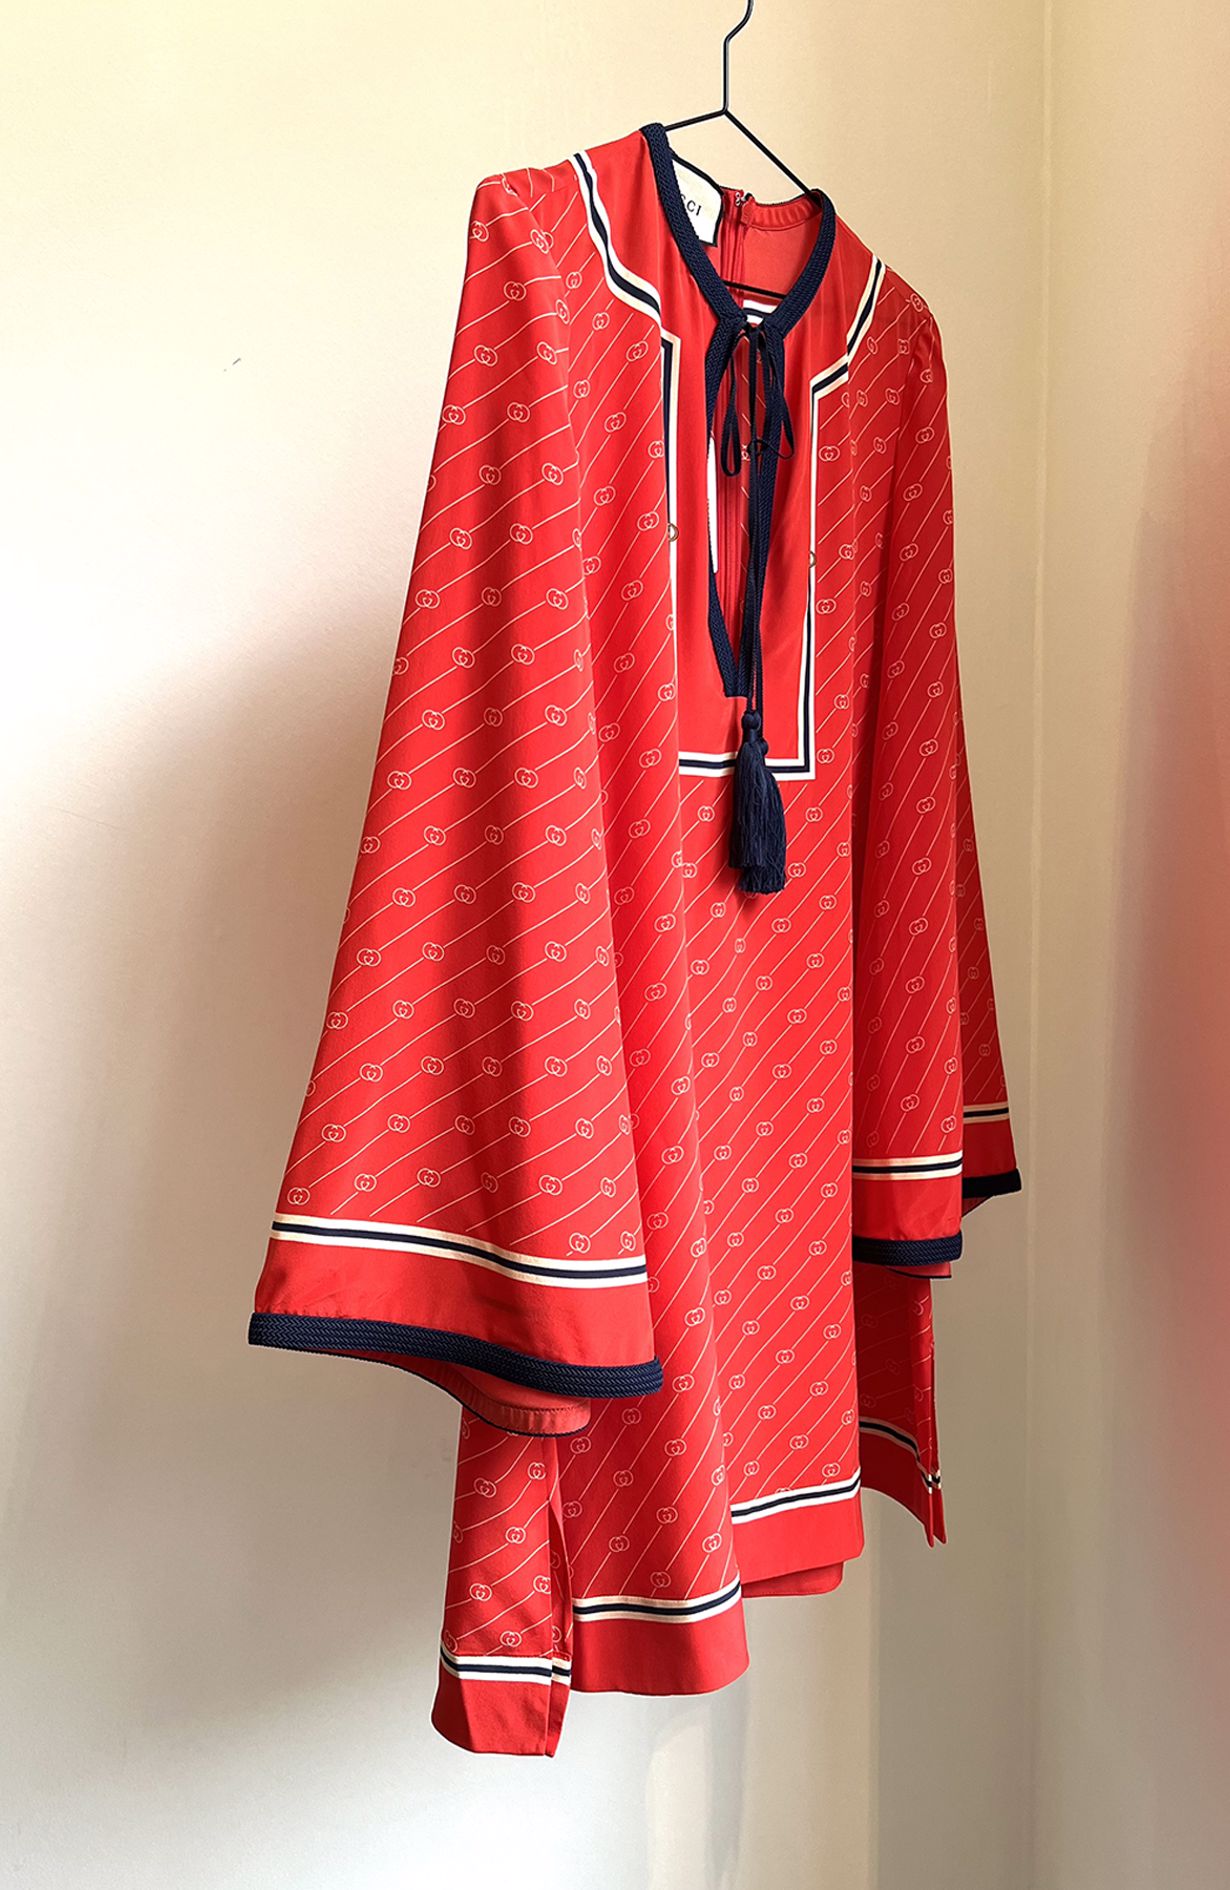 Gucci Silk Dress w. Red & Navy Tassles - Size 40